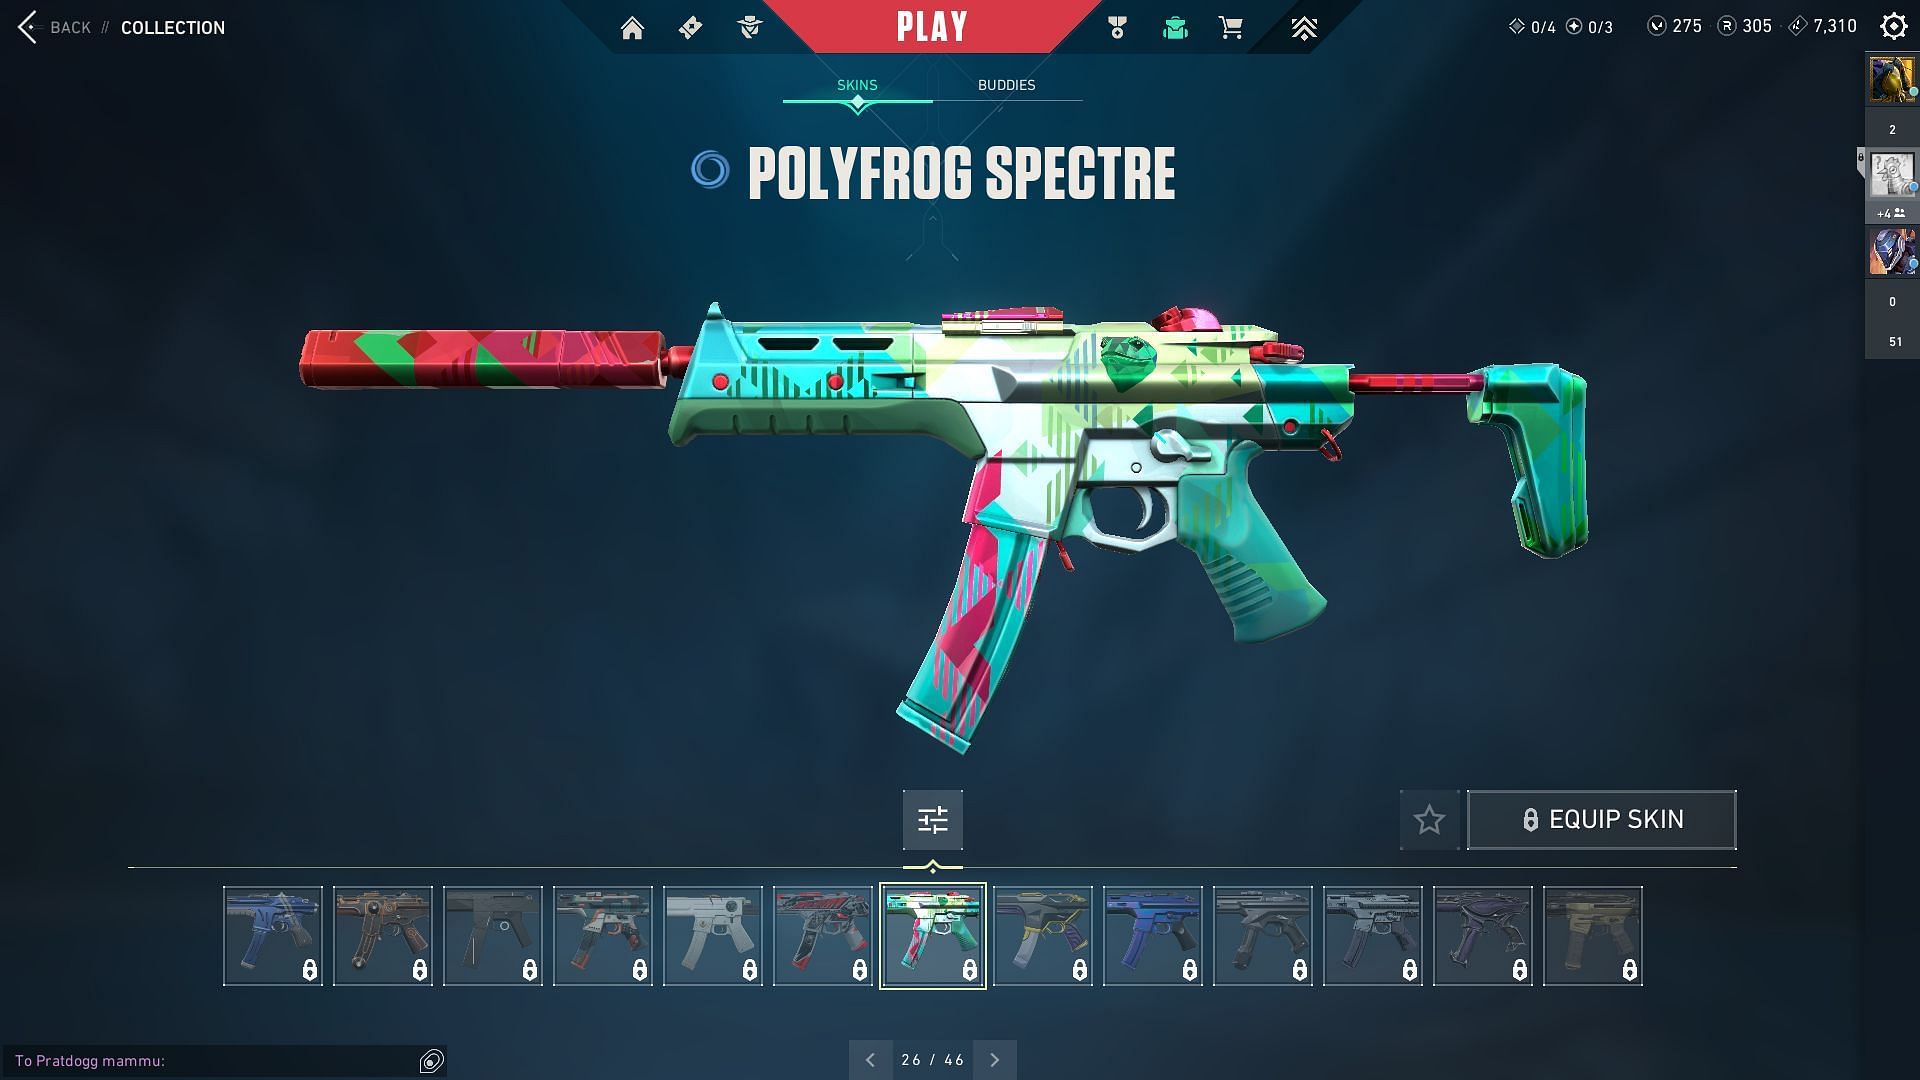 POLYfrog Spectre (Image via Sportskeeda and Riot Games)